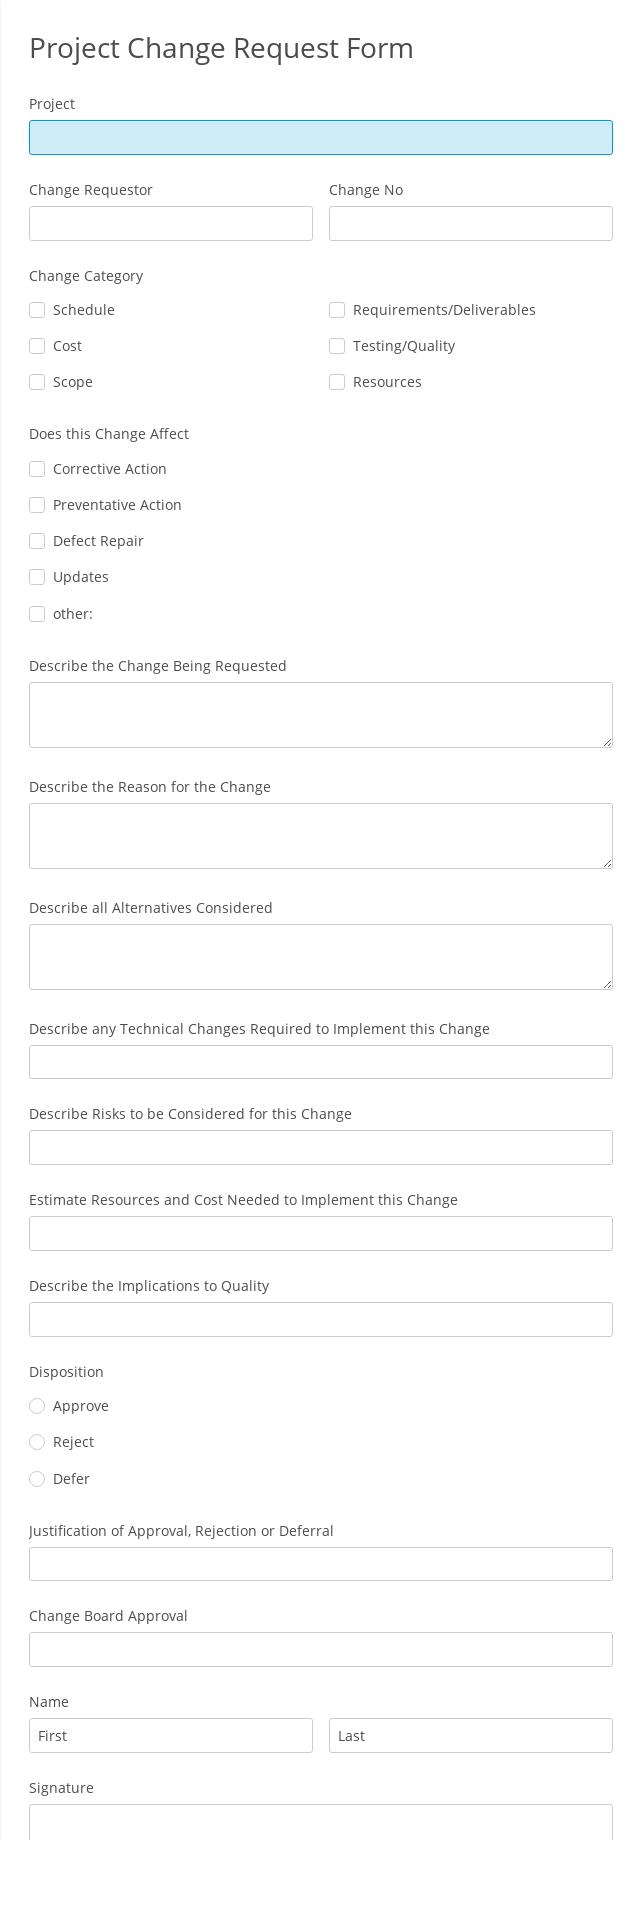 Project Change Request Form